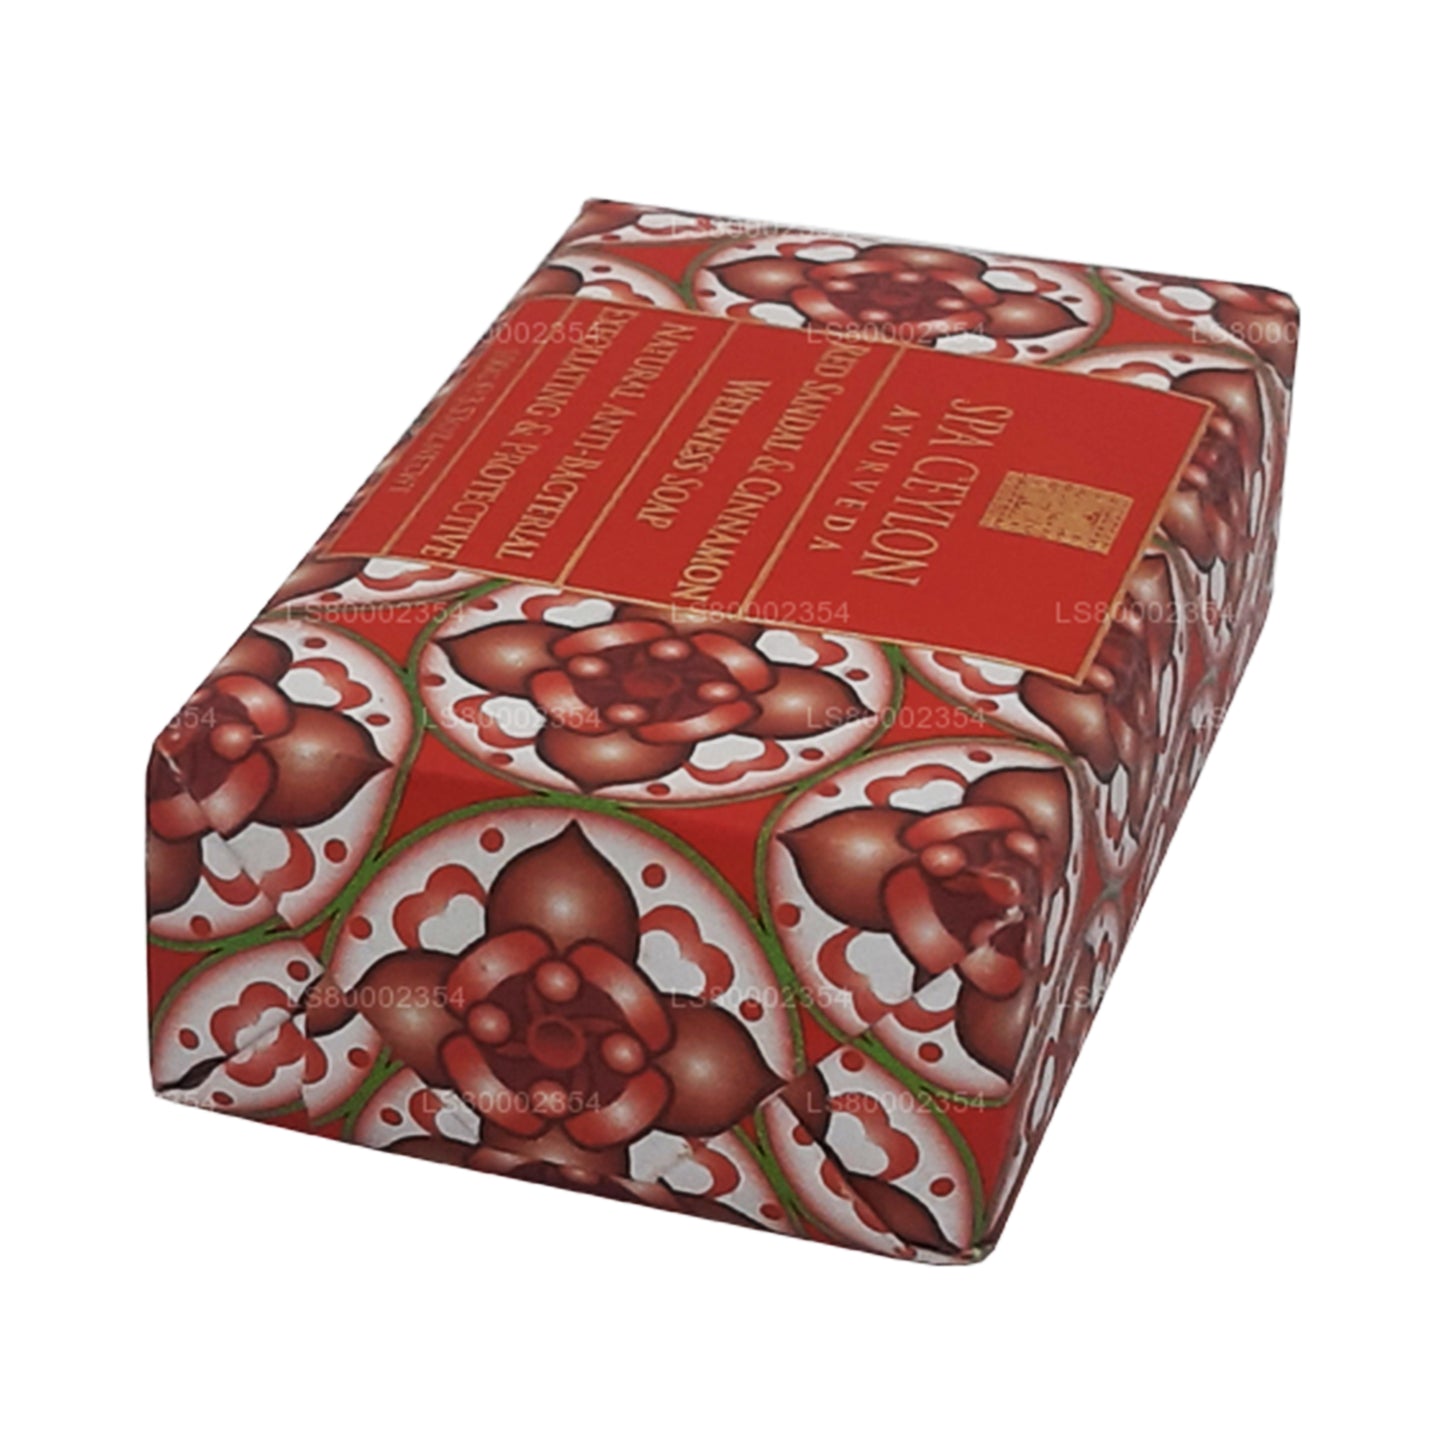 Spa Ceylon Red Sandal and Cinnamon 抗菌去角质健康香皂 (100 克)